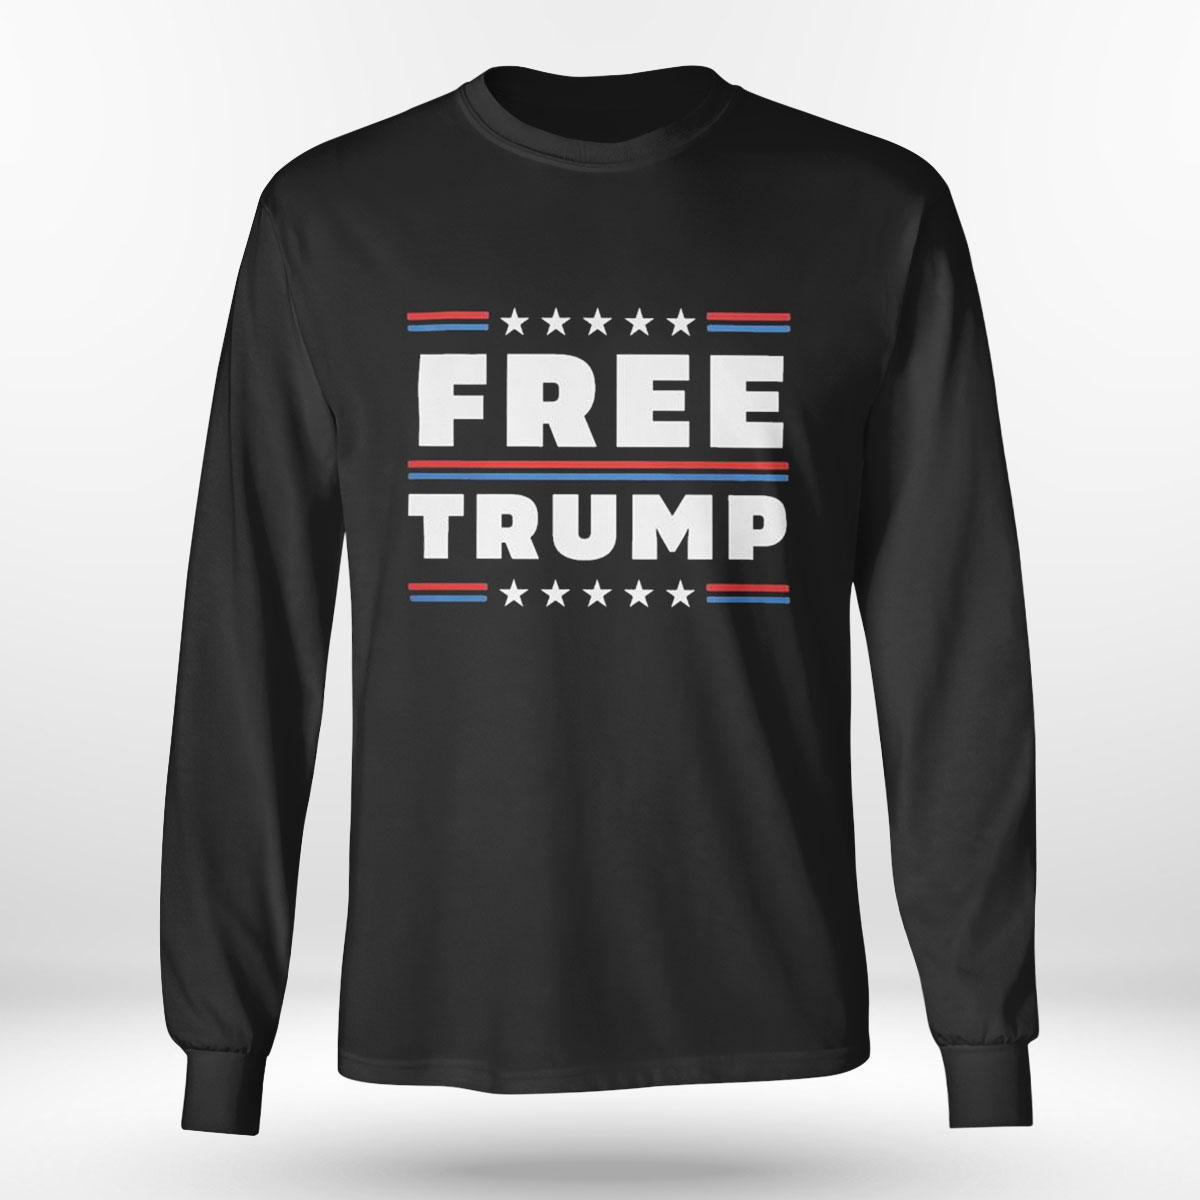 Free Trump Vintage T-shirt